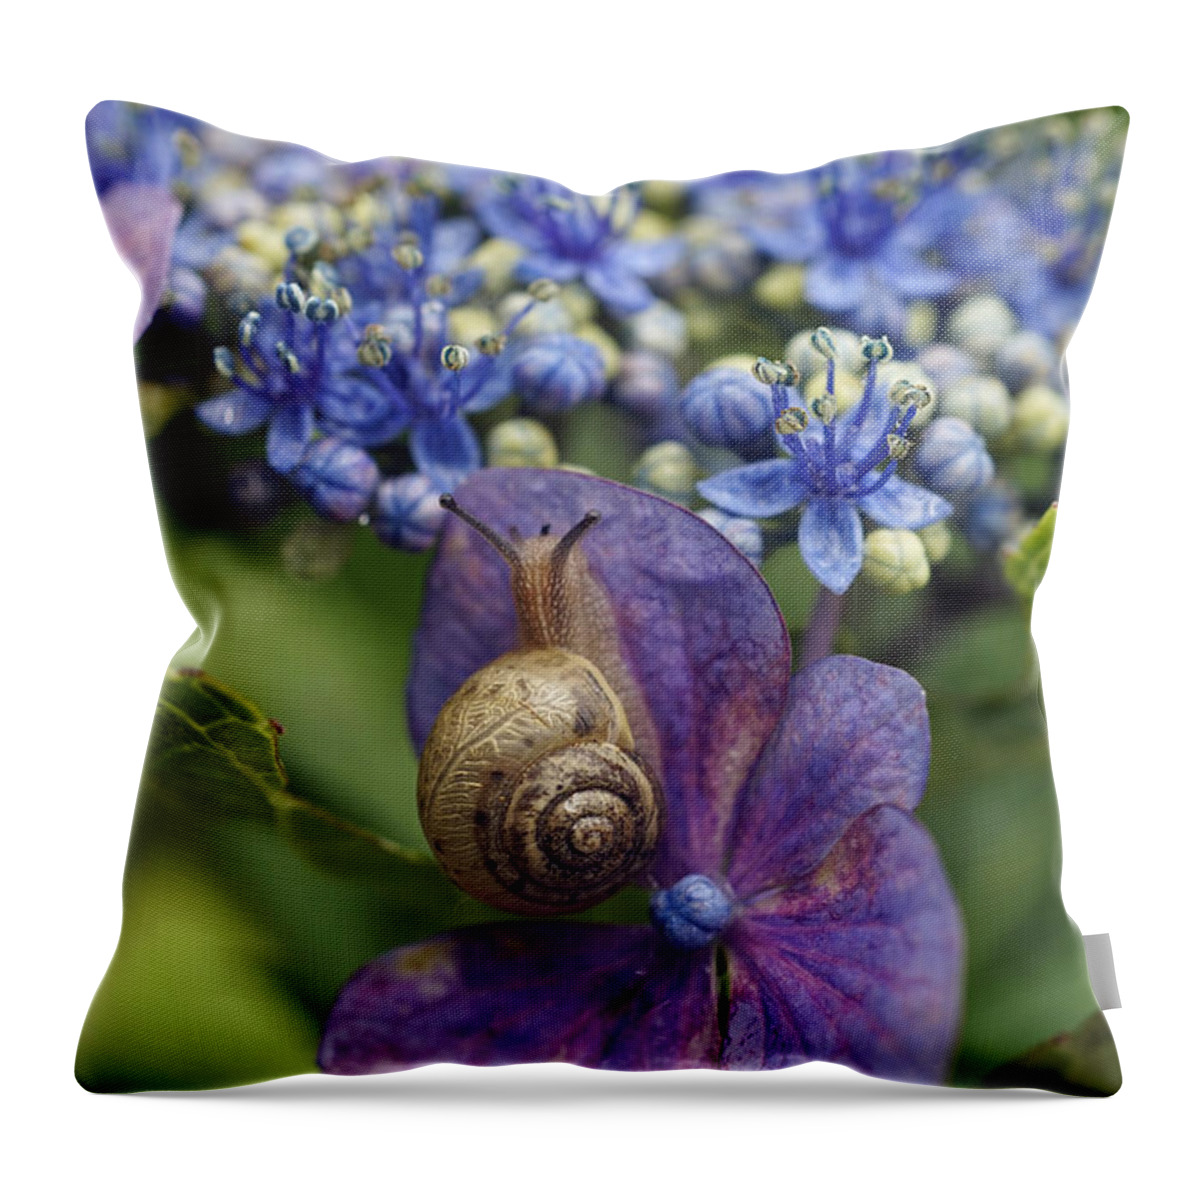 Hiroya Minakuchi Throw Pillow featuring the photograph Snail On Hydrangea Flower Japan by Hiroya Minakuchi